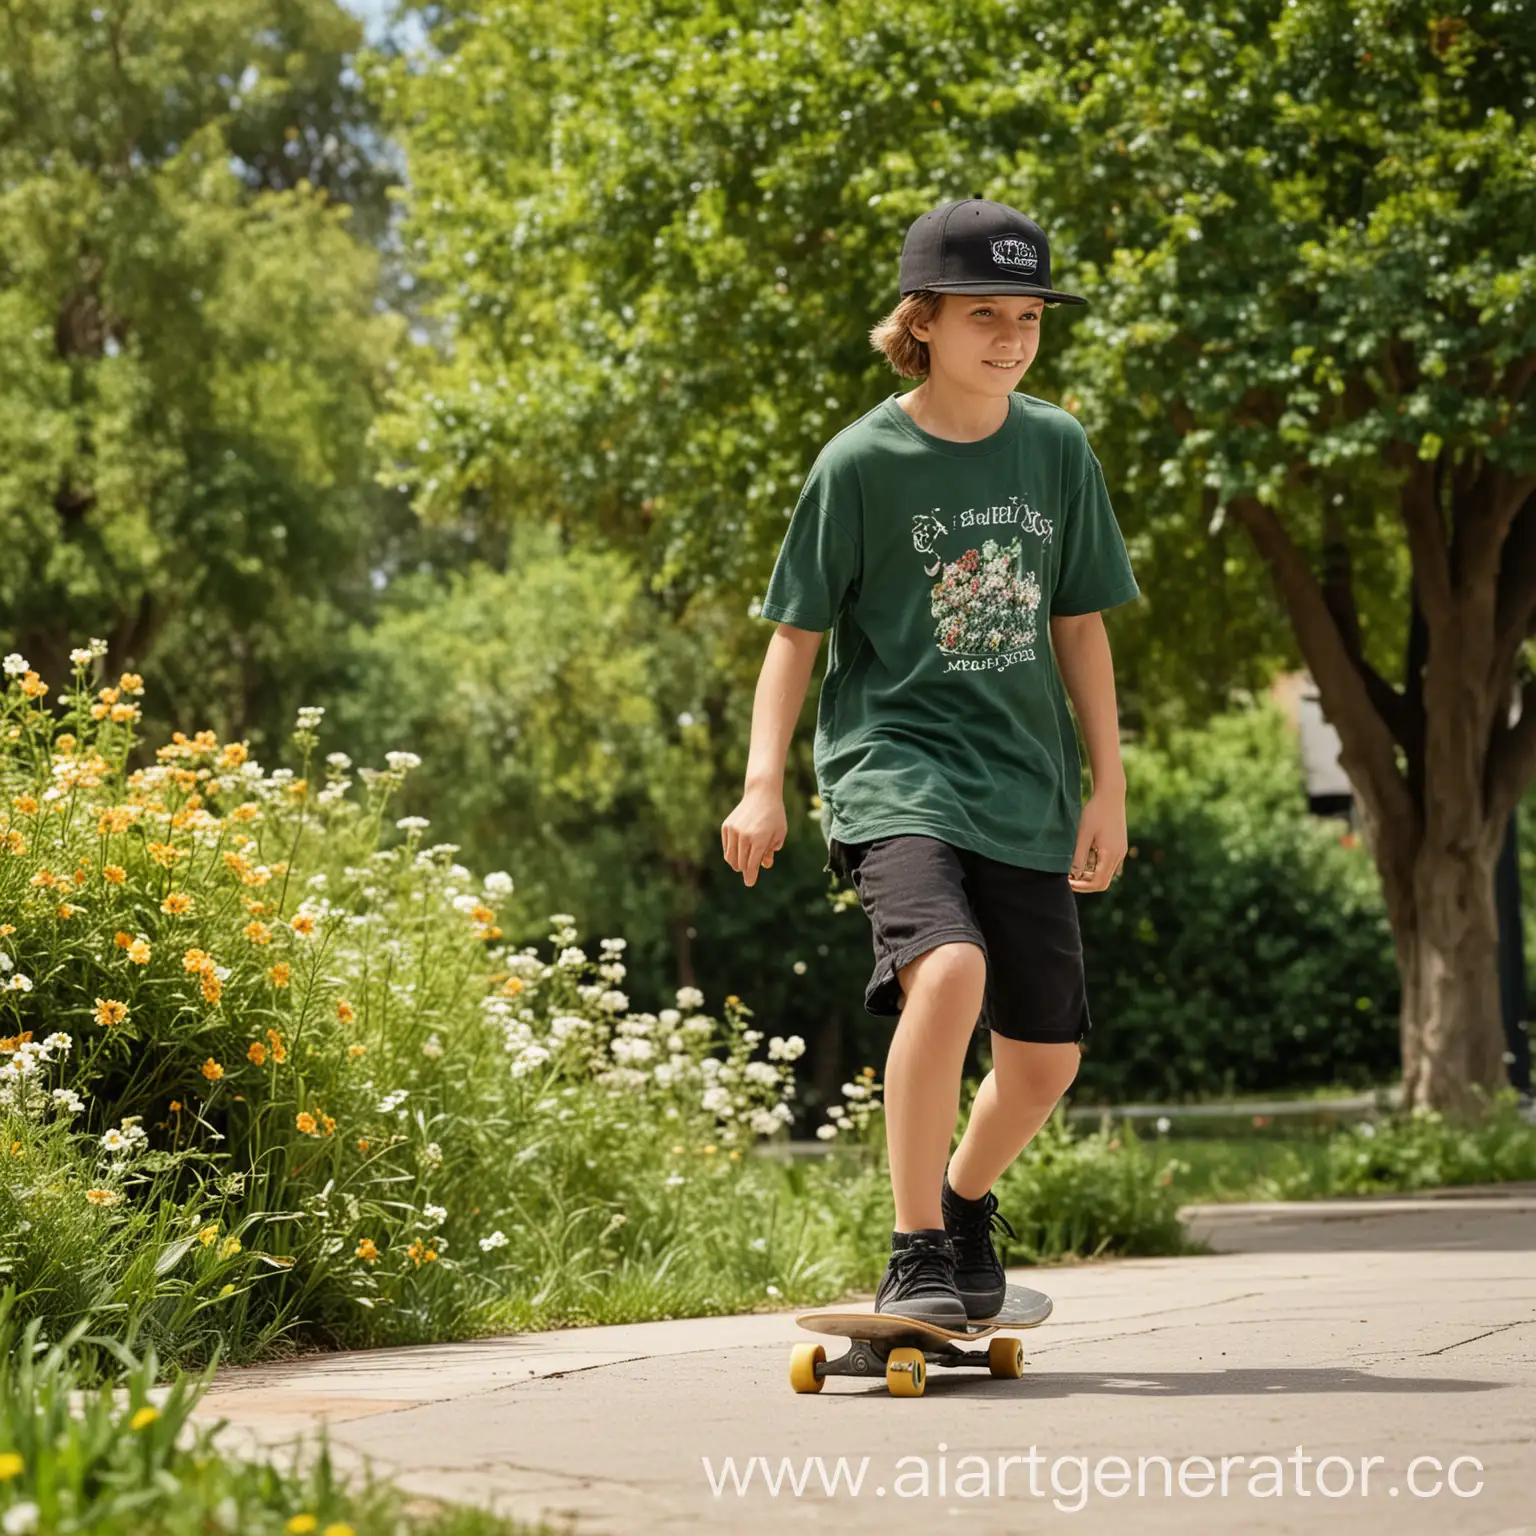 Active-Boy-Skateboarding-in-Green-TShirt-at-Park